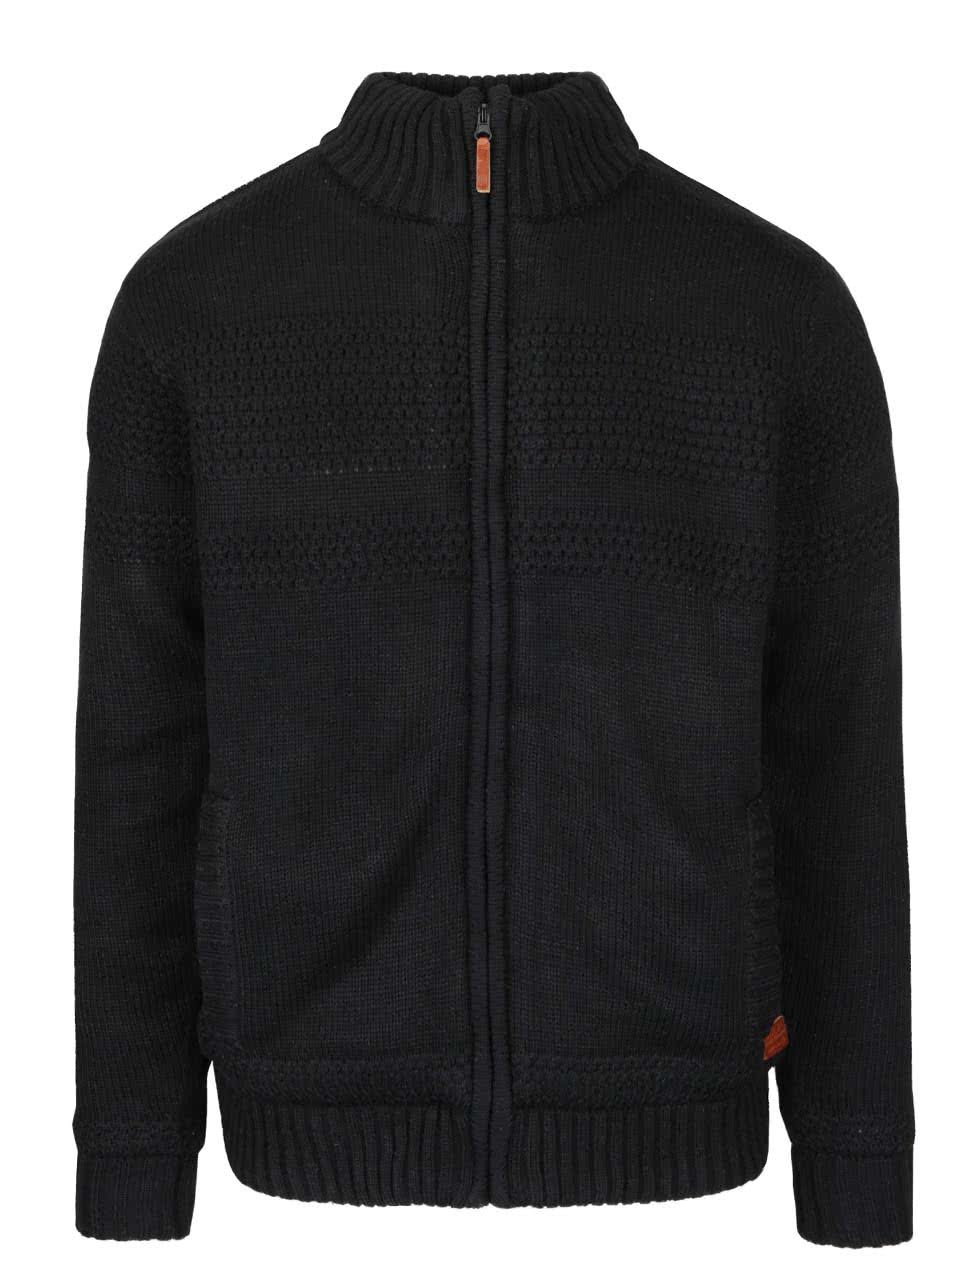 Černý svetr na zip s podšívkou z umělé kožešiny Blend